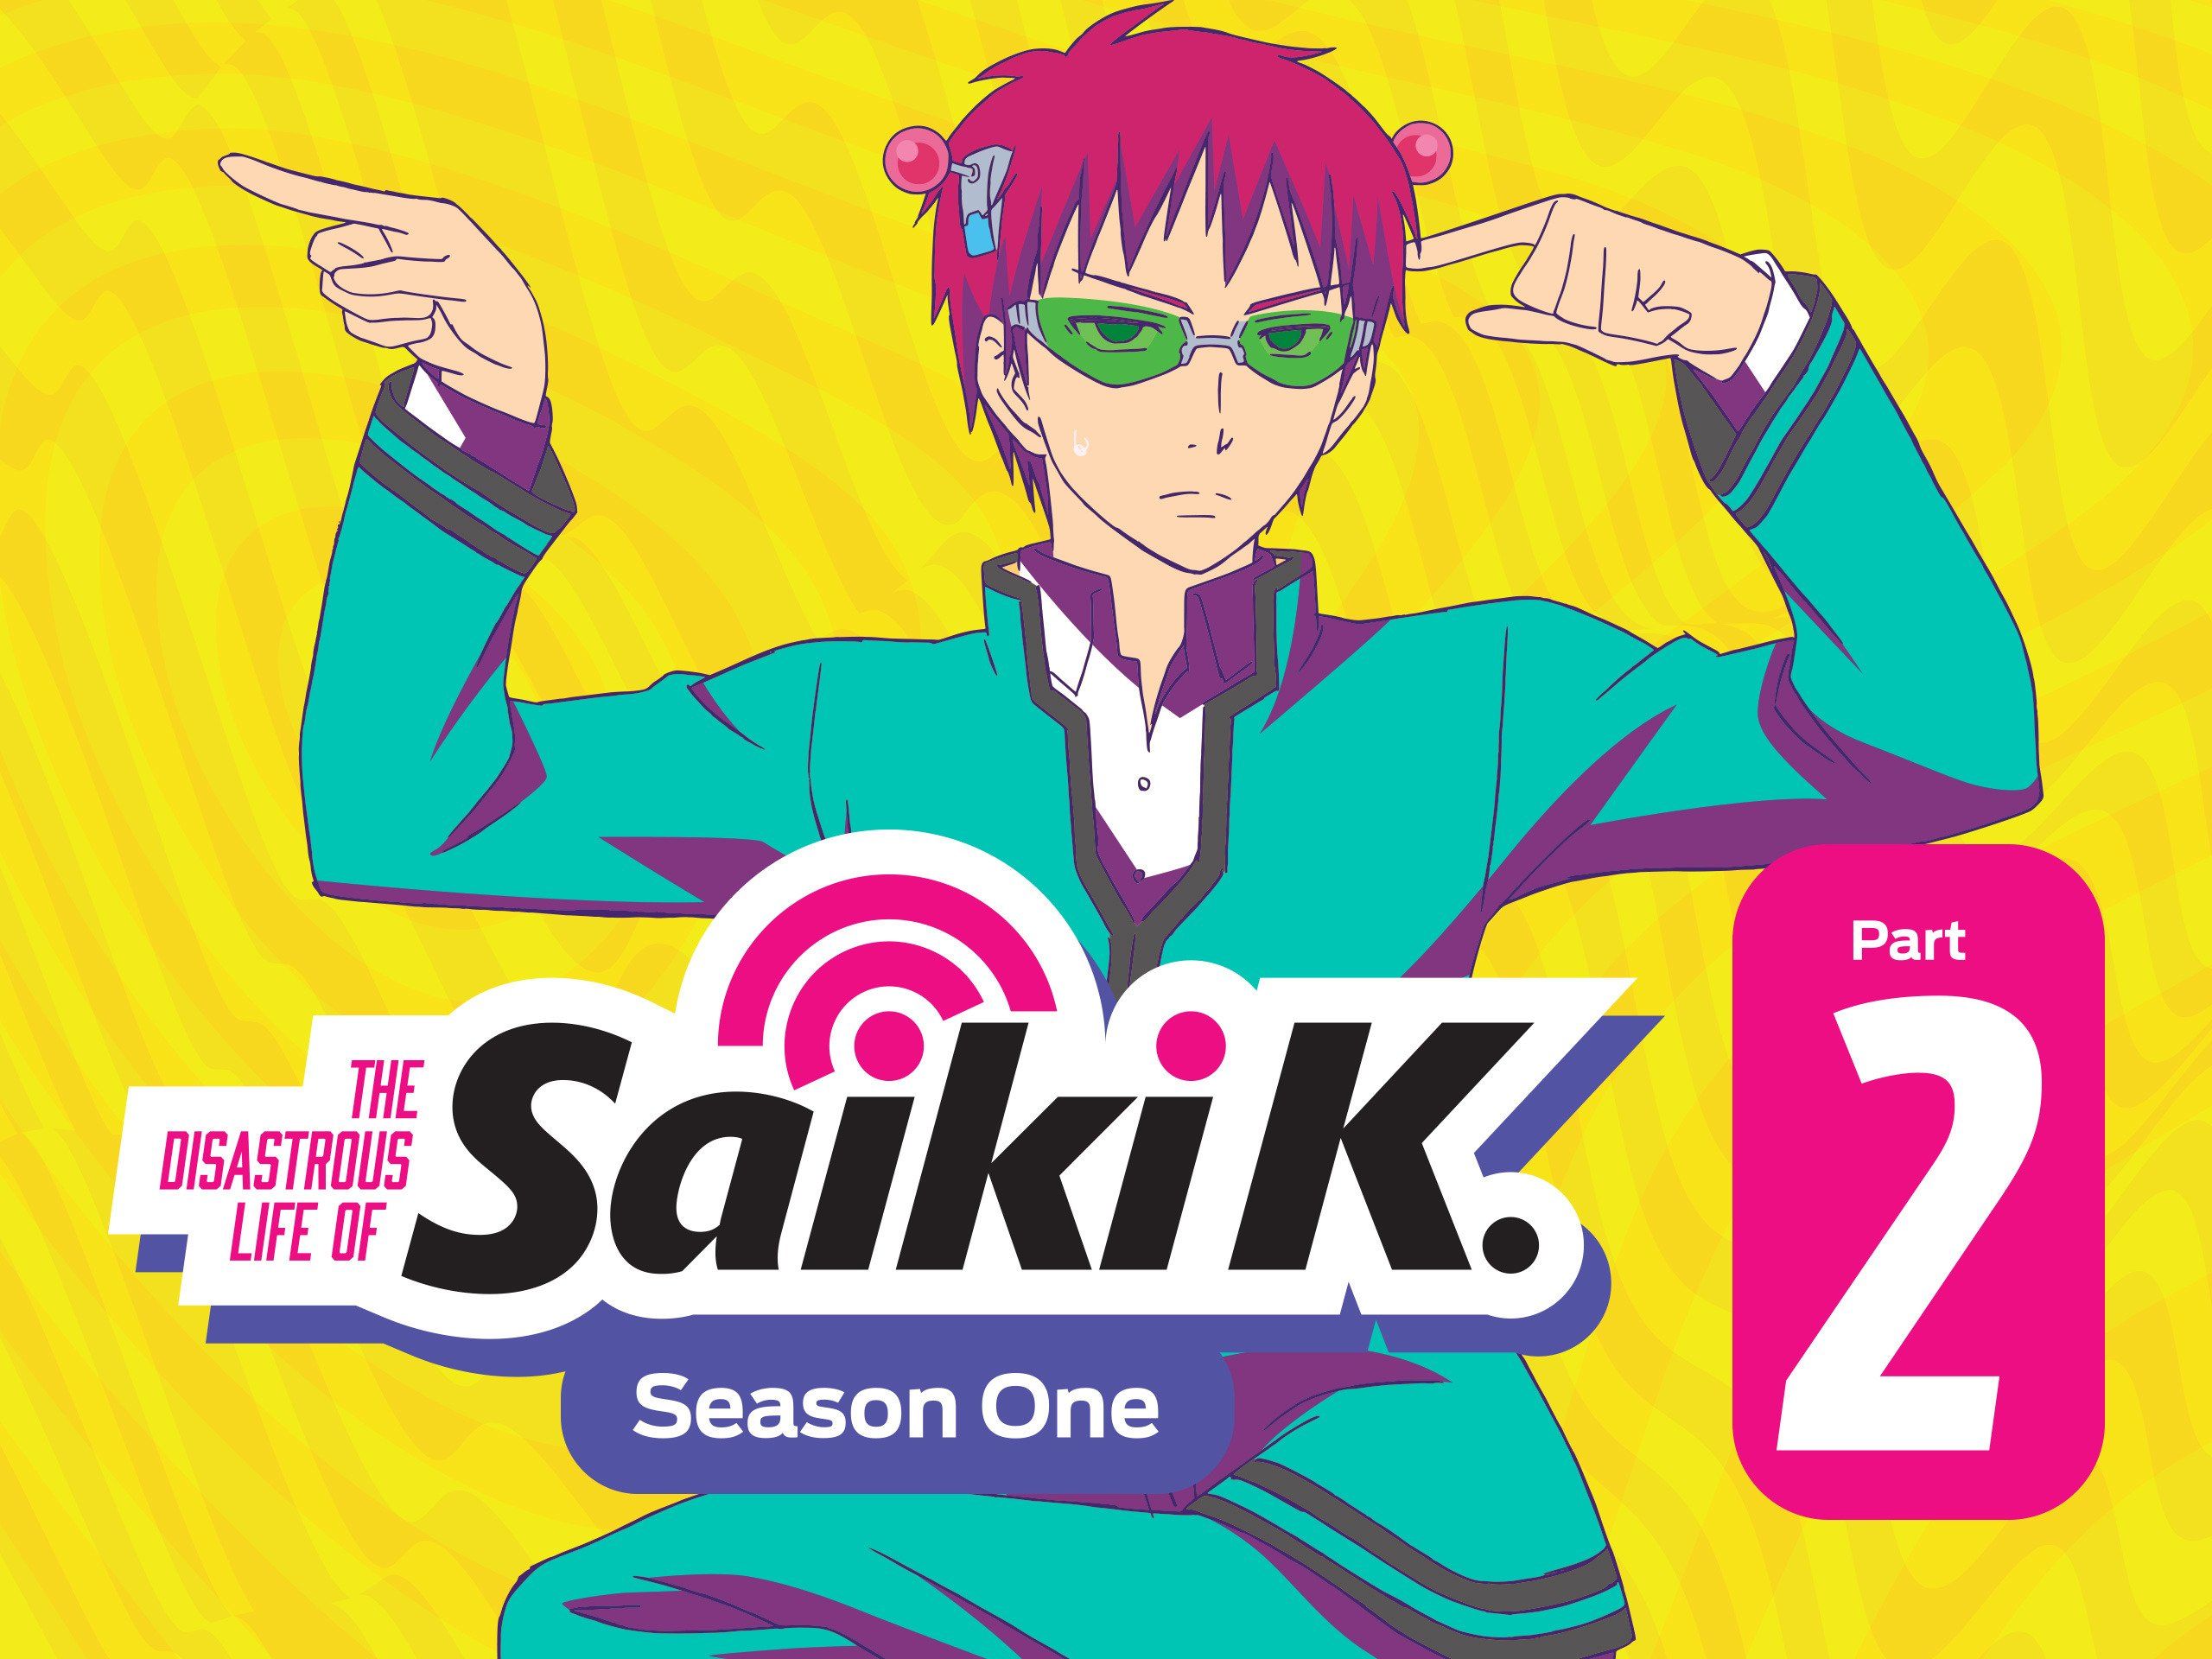 Watch The Disastrous Life of Saiki K., Season 1, Pt. 2